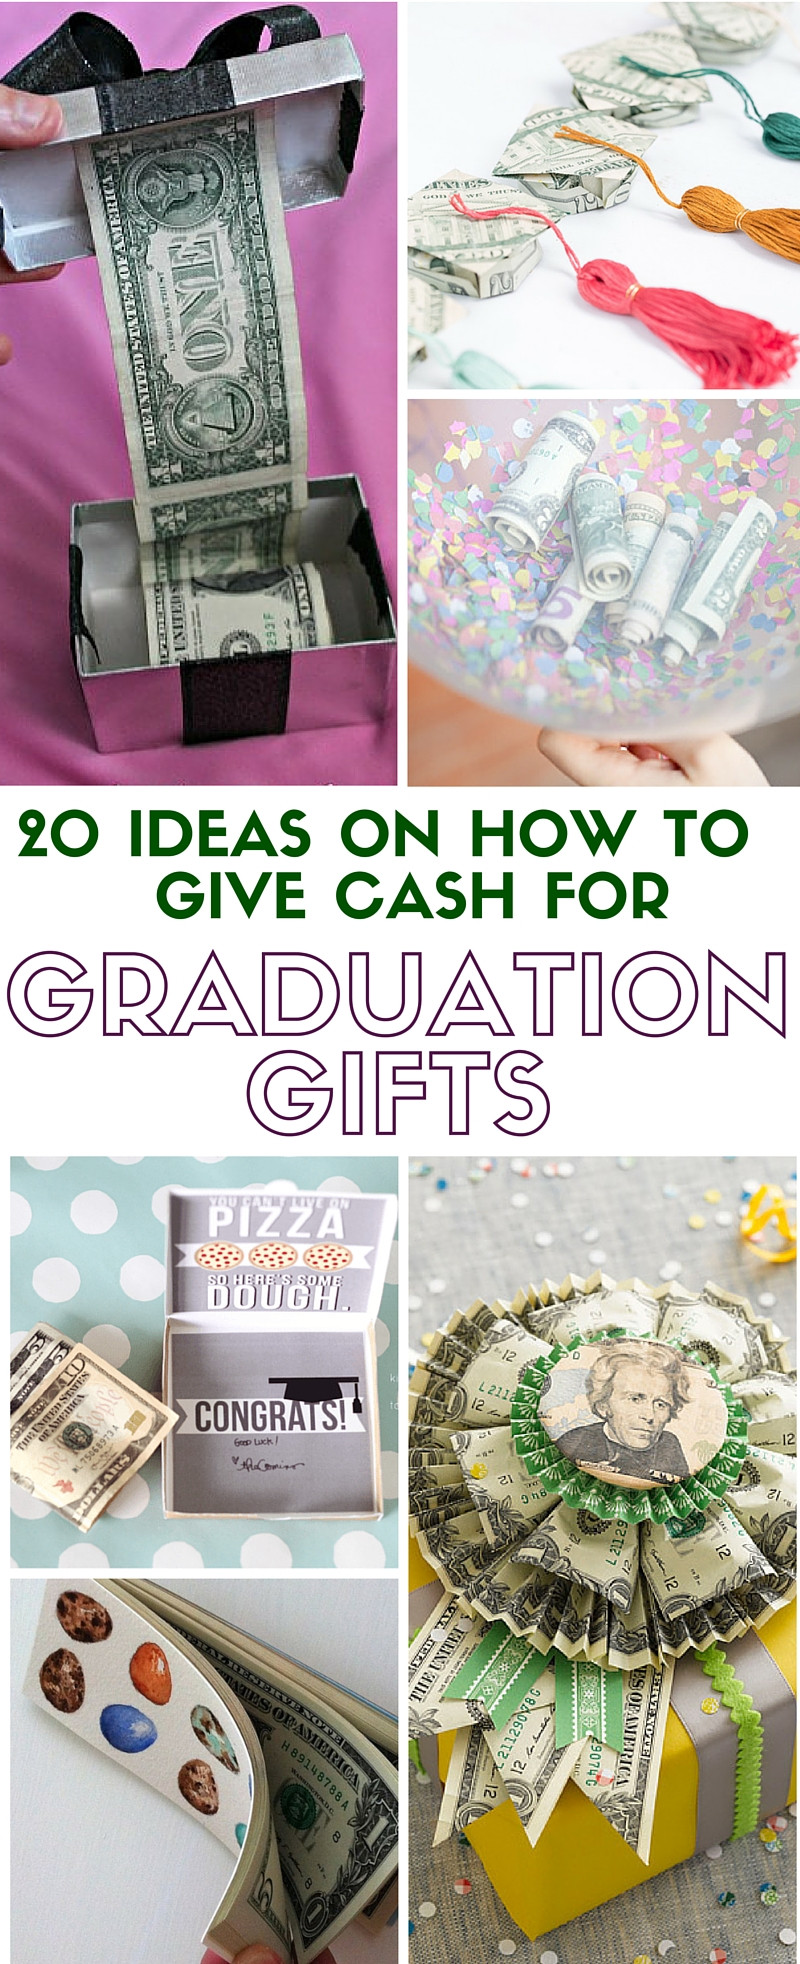 Graduation Day Gift Ideas
 31 Back To School Teacher Gift Ideas The Crafty Blog Stalker